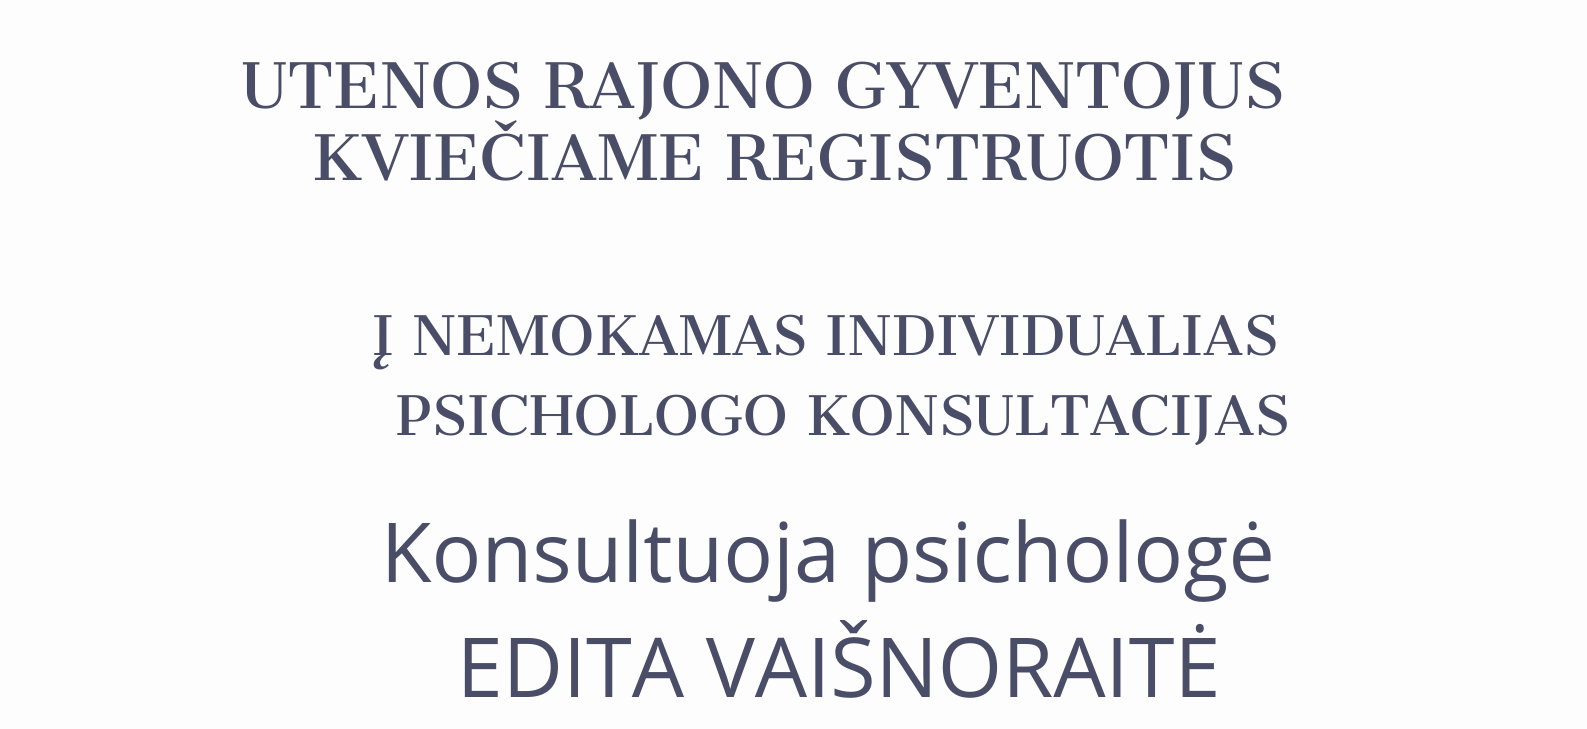 kvieciame-registruotis-i-individualias-psichologo-konsultacijas